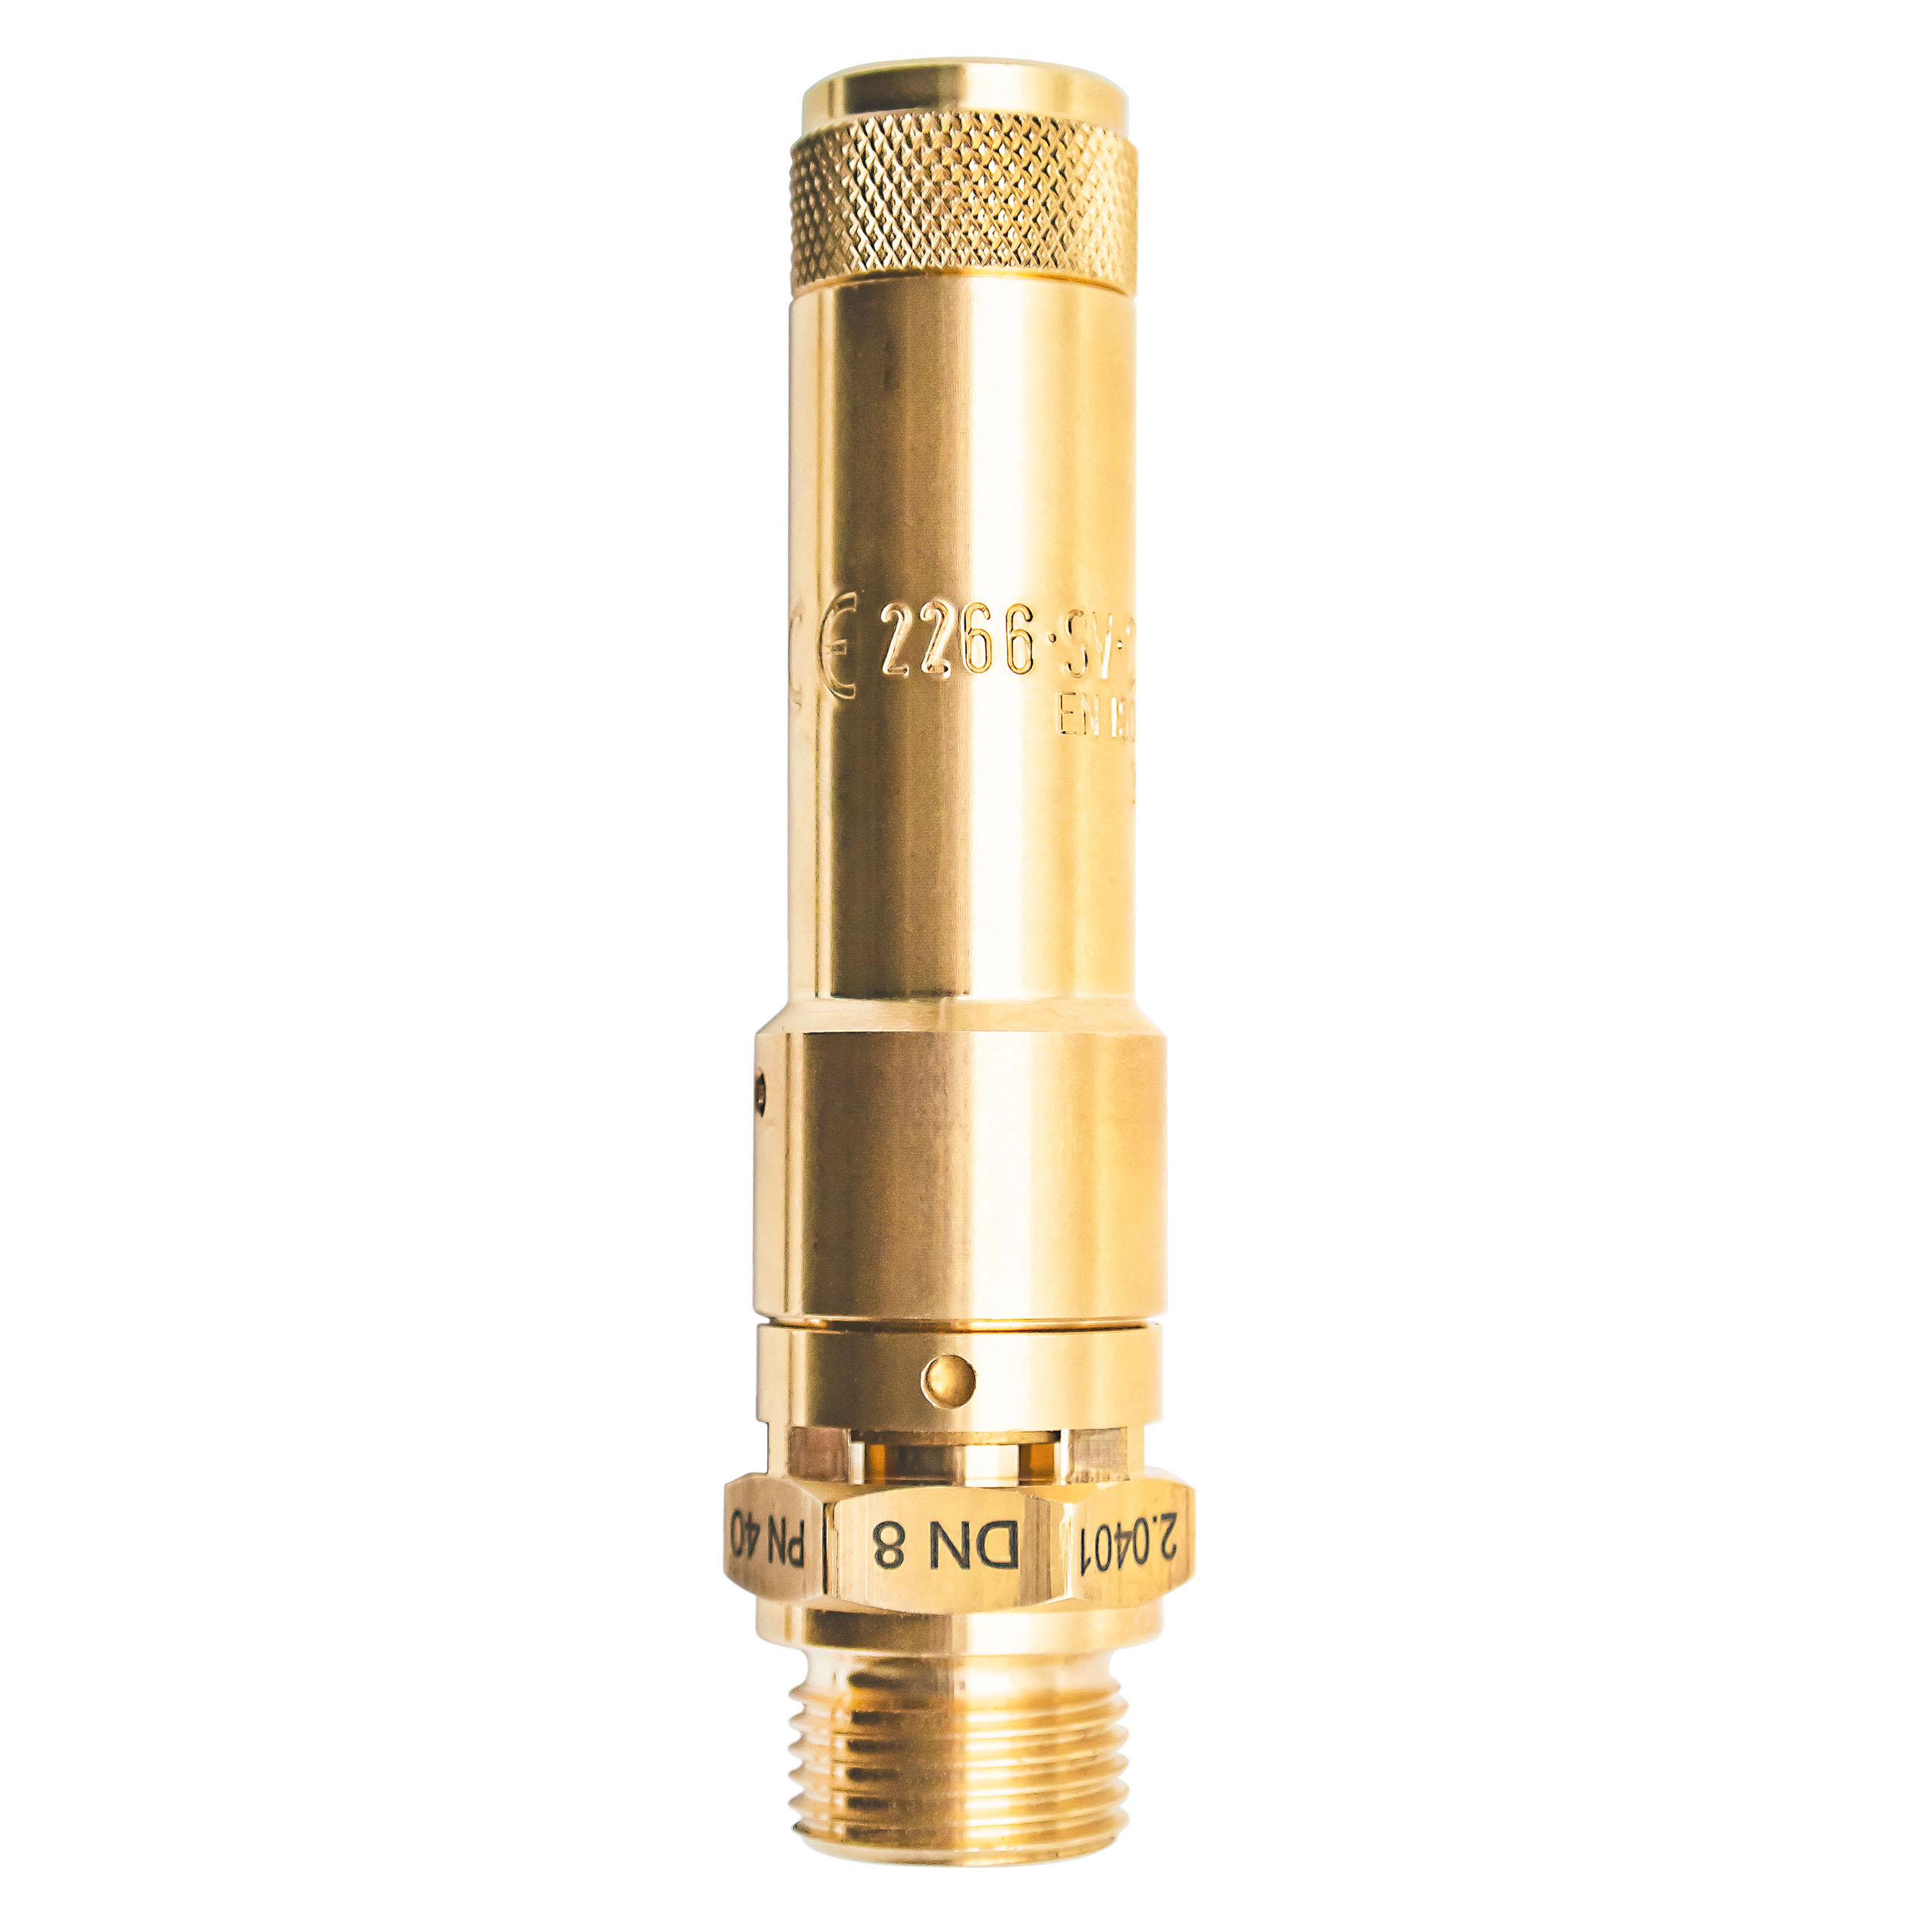 Savety valve component tested DN 8, G¼, set pressure: 11.4 bar (165,3 psi)